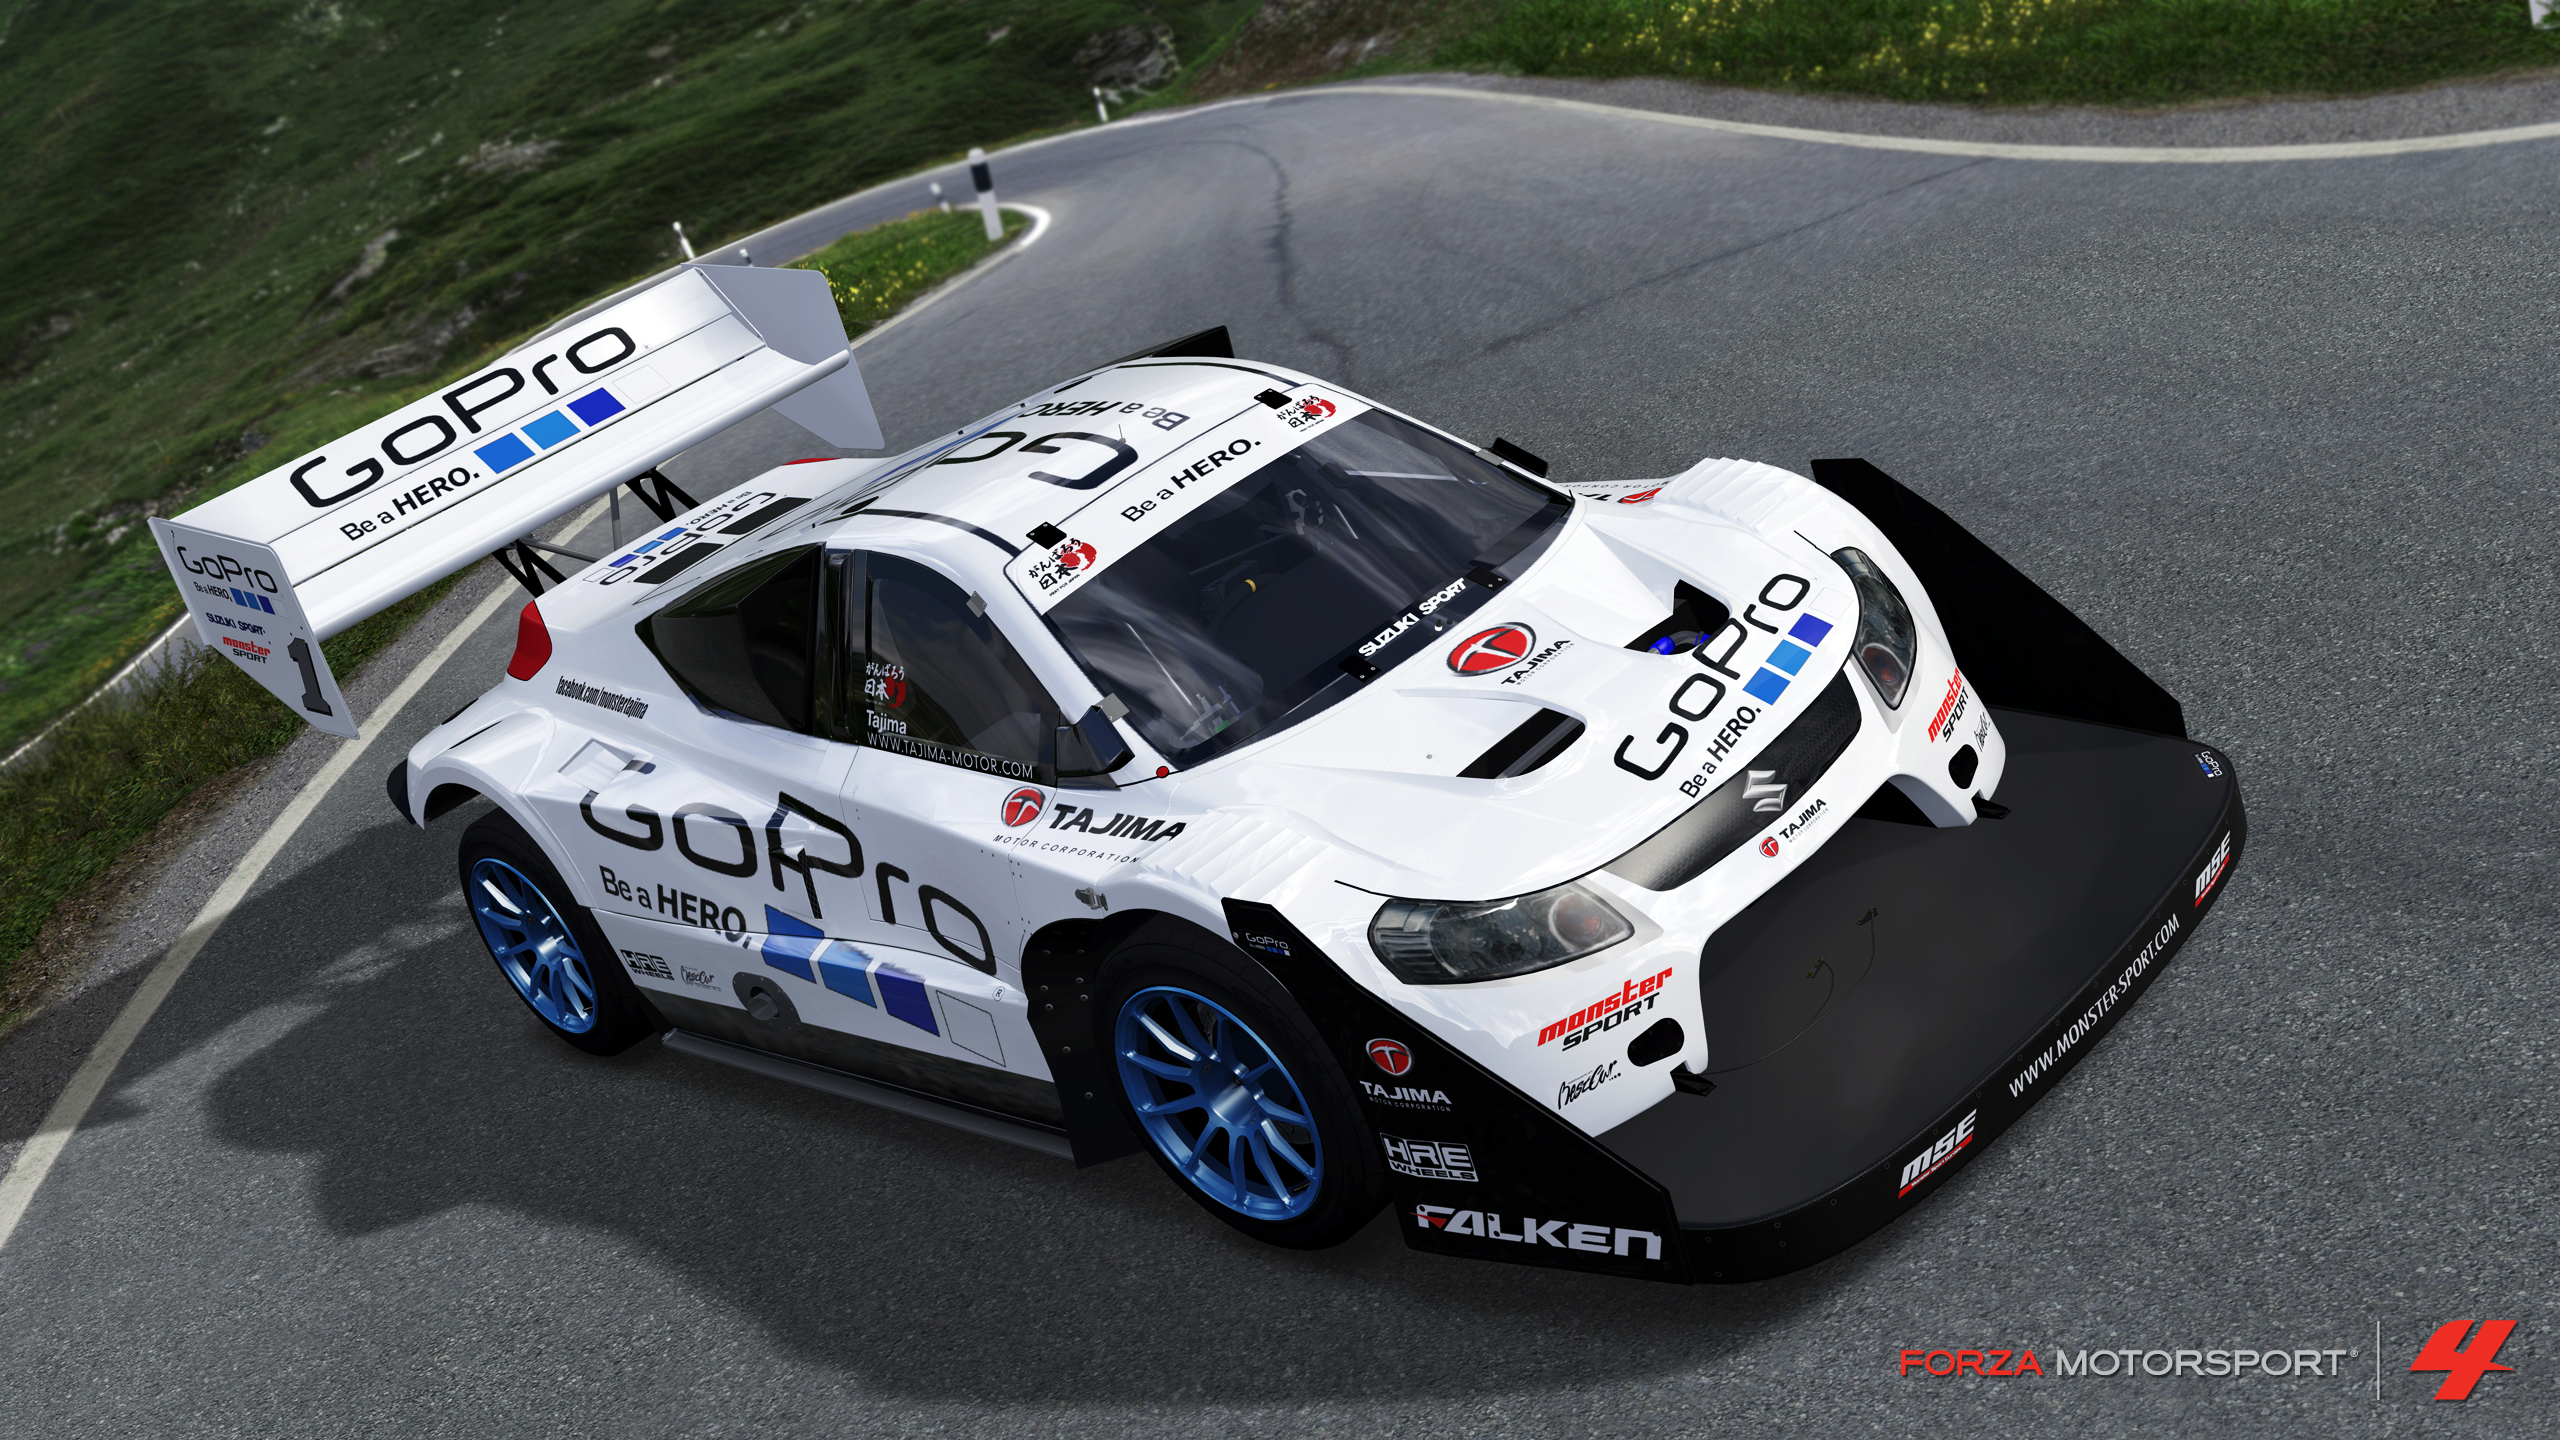 Forza Motorsport 5 - IGN